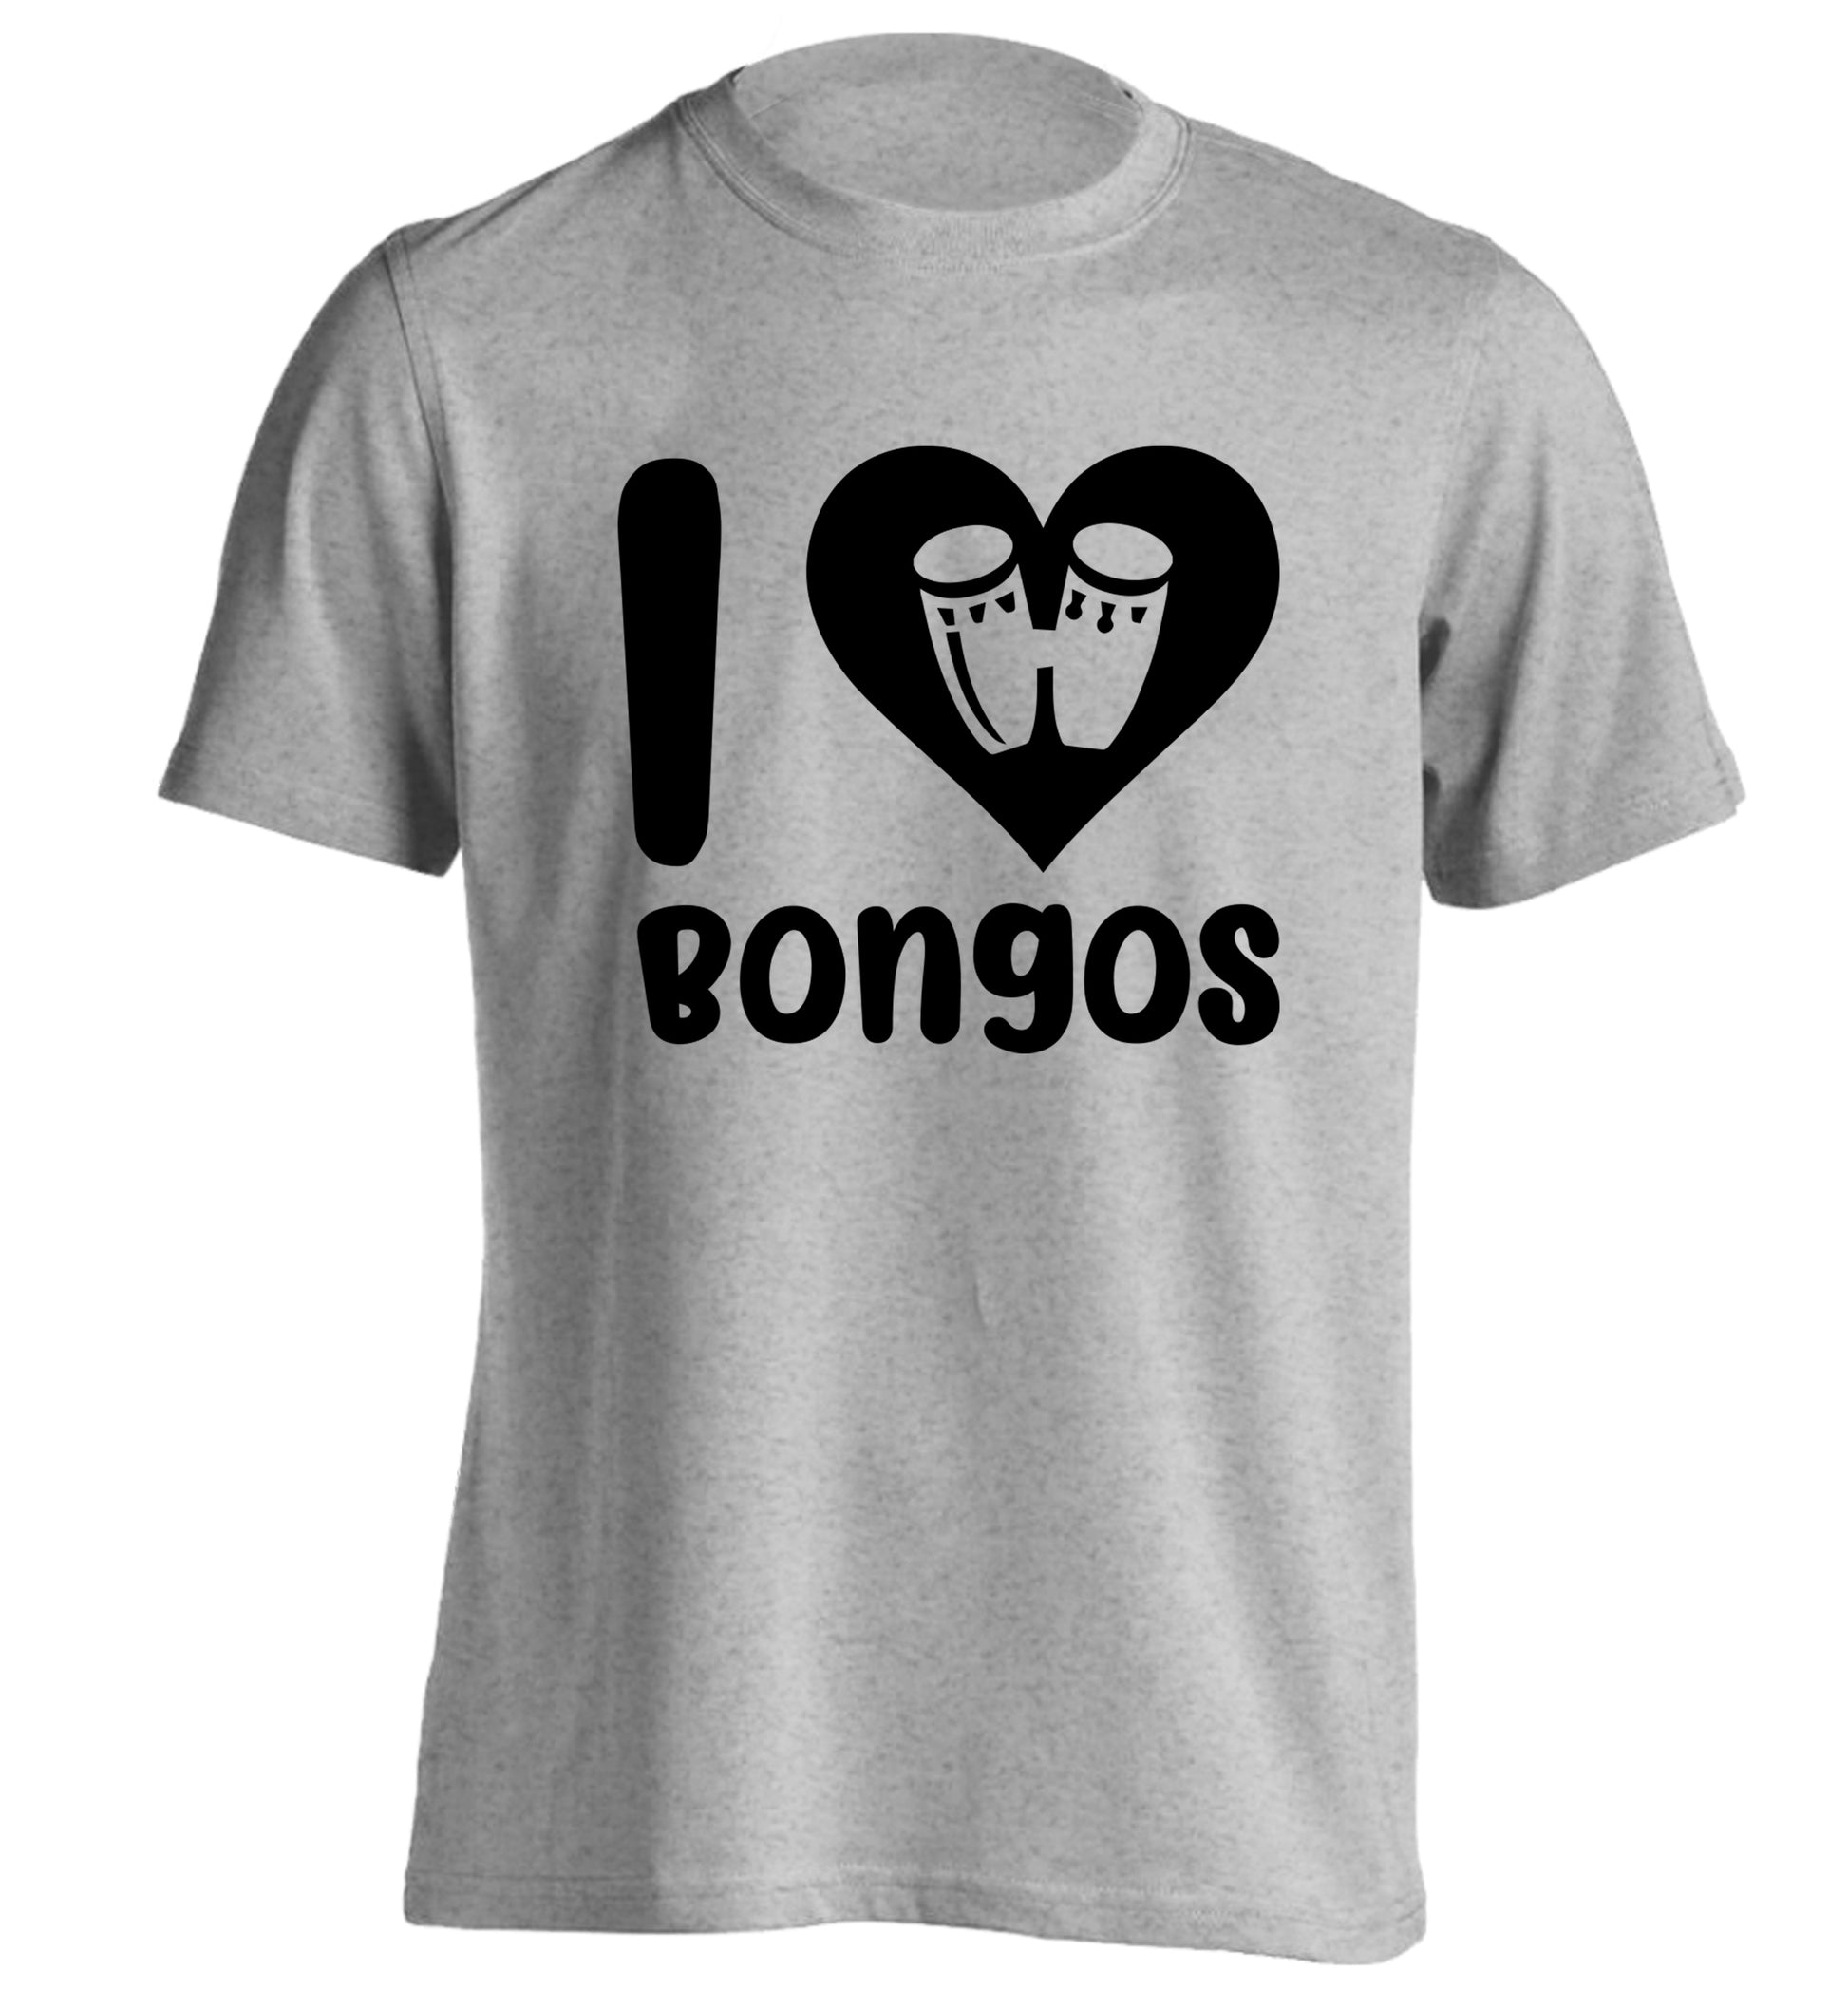 I love bongos adults unisex grey Tshirt 2XL